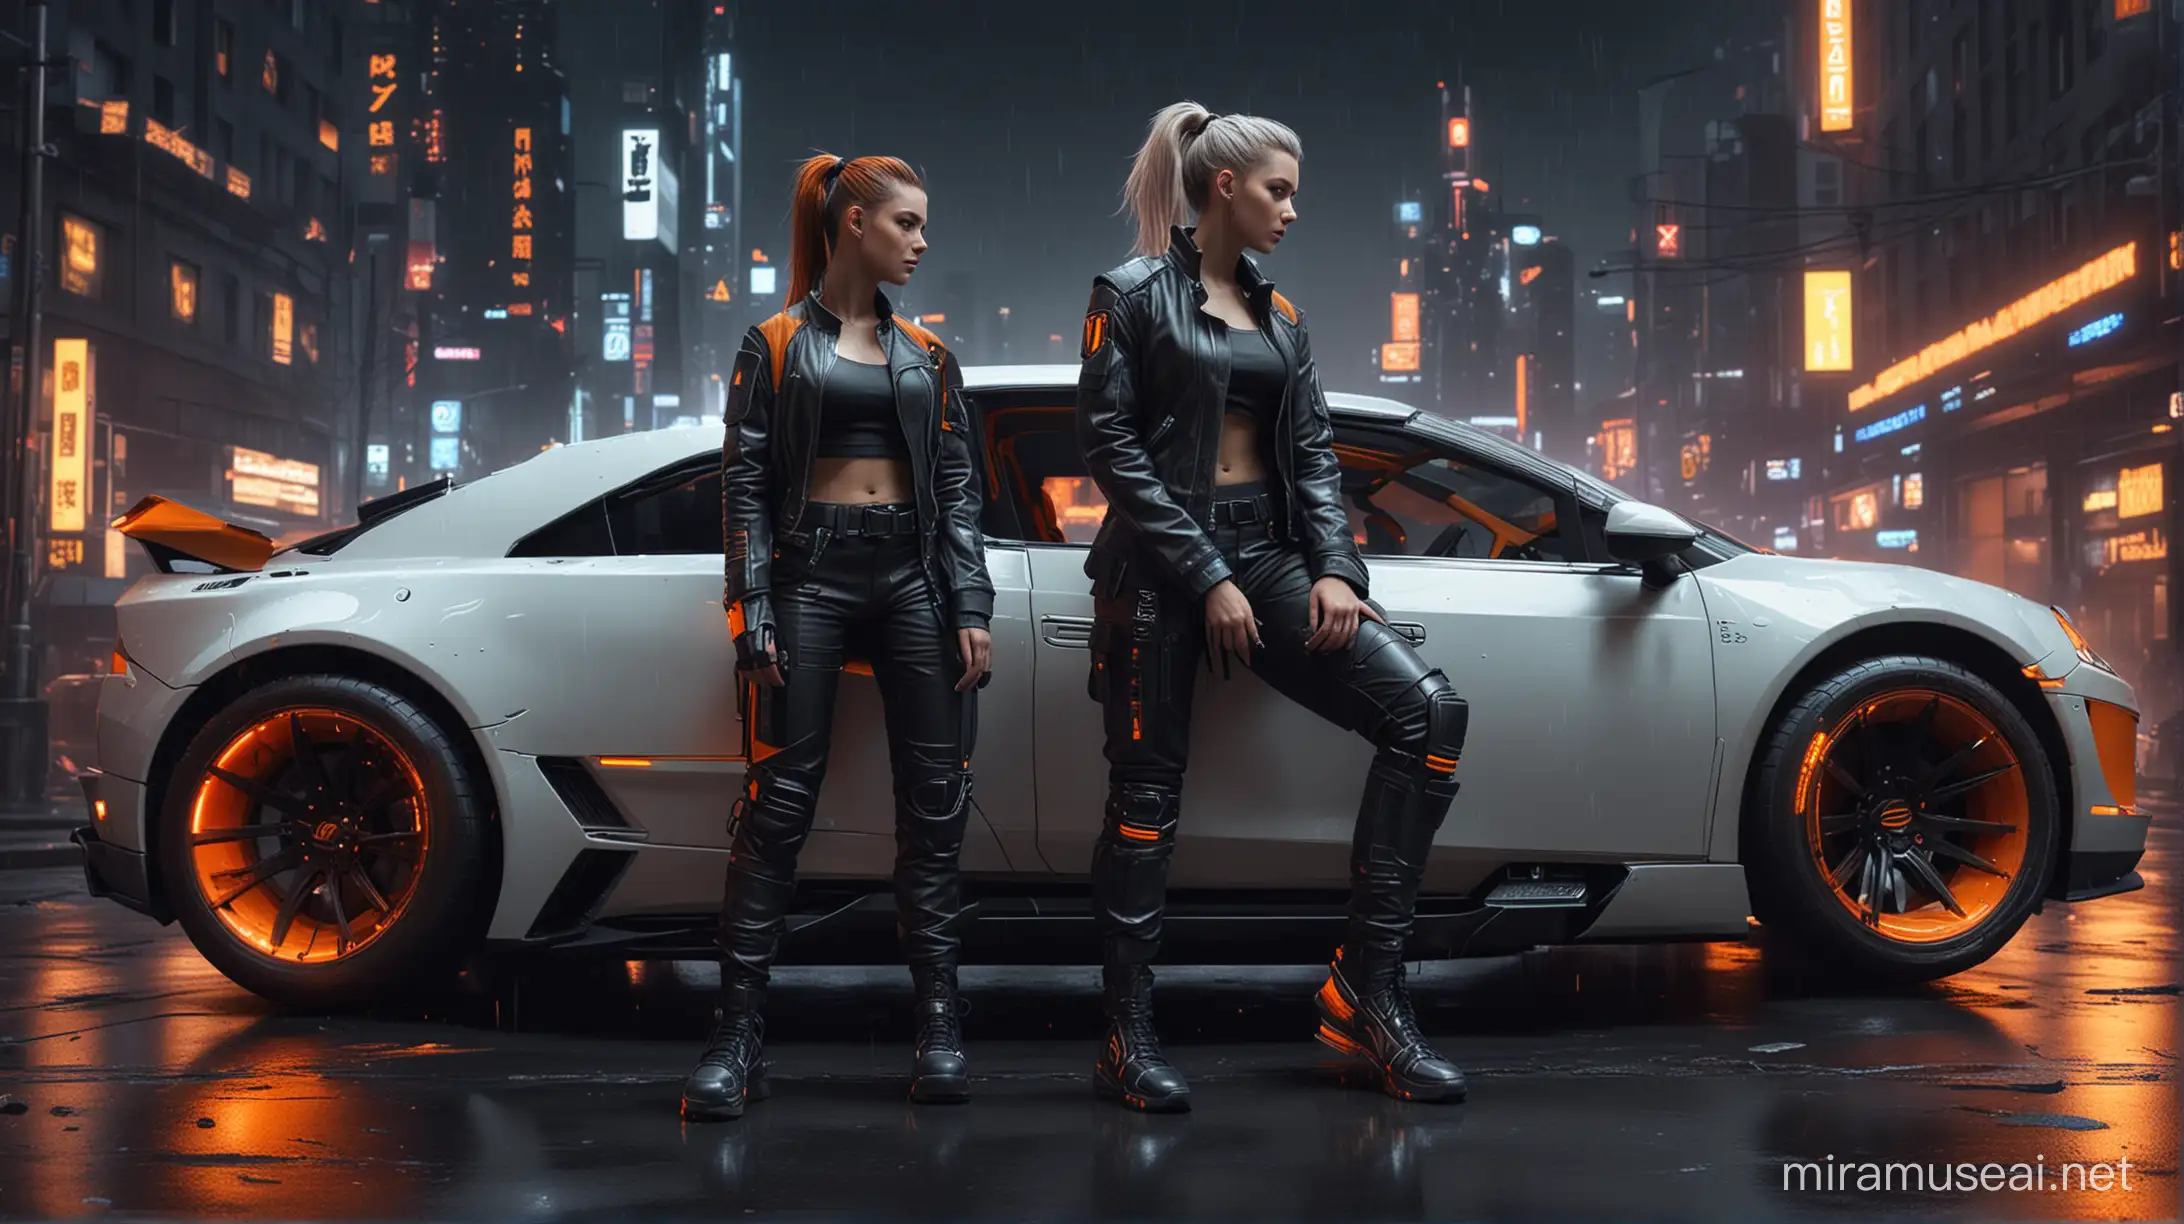 Futuristic Cyberpunk Couple Leaning on Luxury Car in Neonlit Cityscape